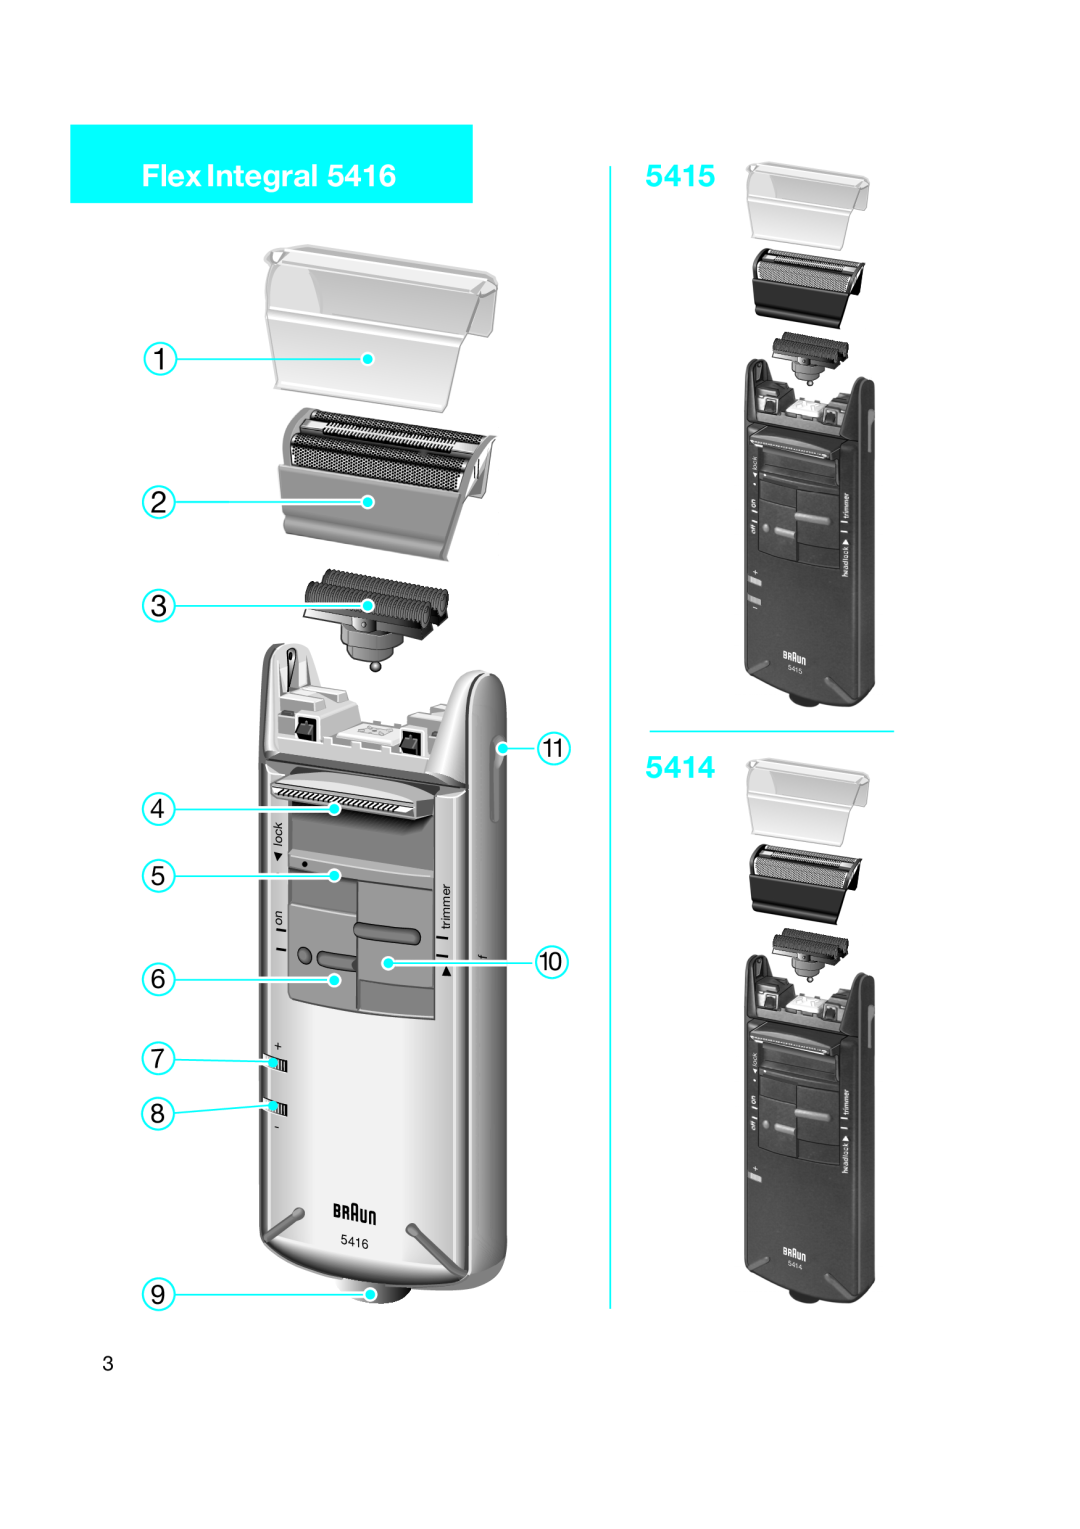 Braun 5414 manual Flex Integral, 5415, 10of, 5416, lock, trimmer 